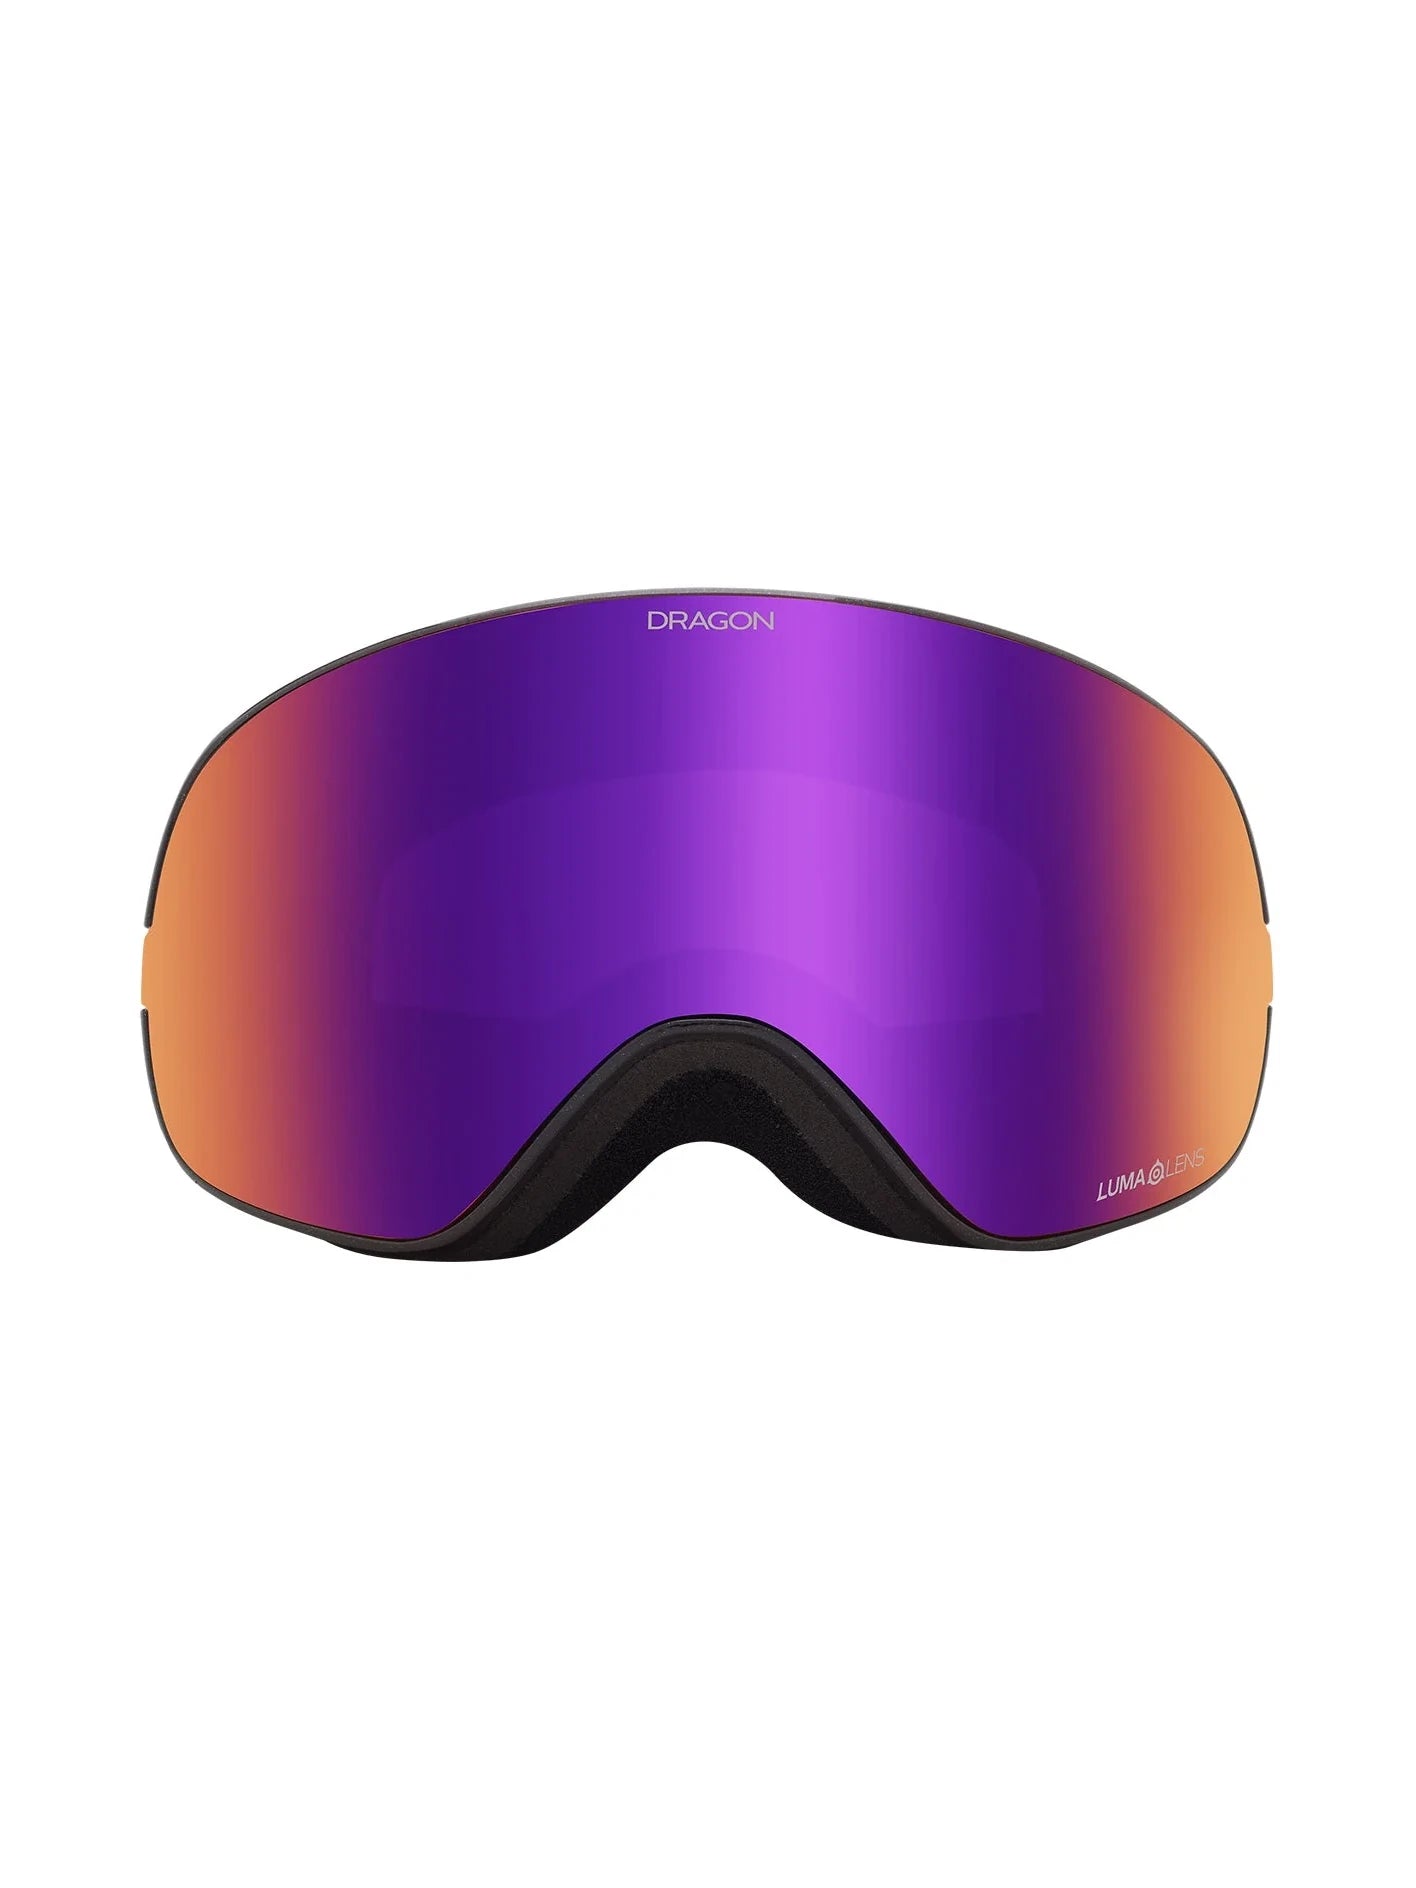 Dragon X2s - Black Pearl with Lumalens Purple Ionized & Lumalens Amber Lens | Dragon | Gafas de snowboard | Snowboard Shop | surfdevils.com